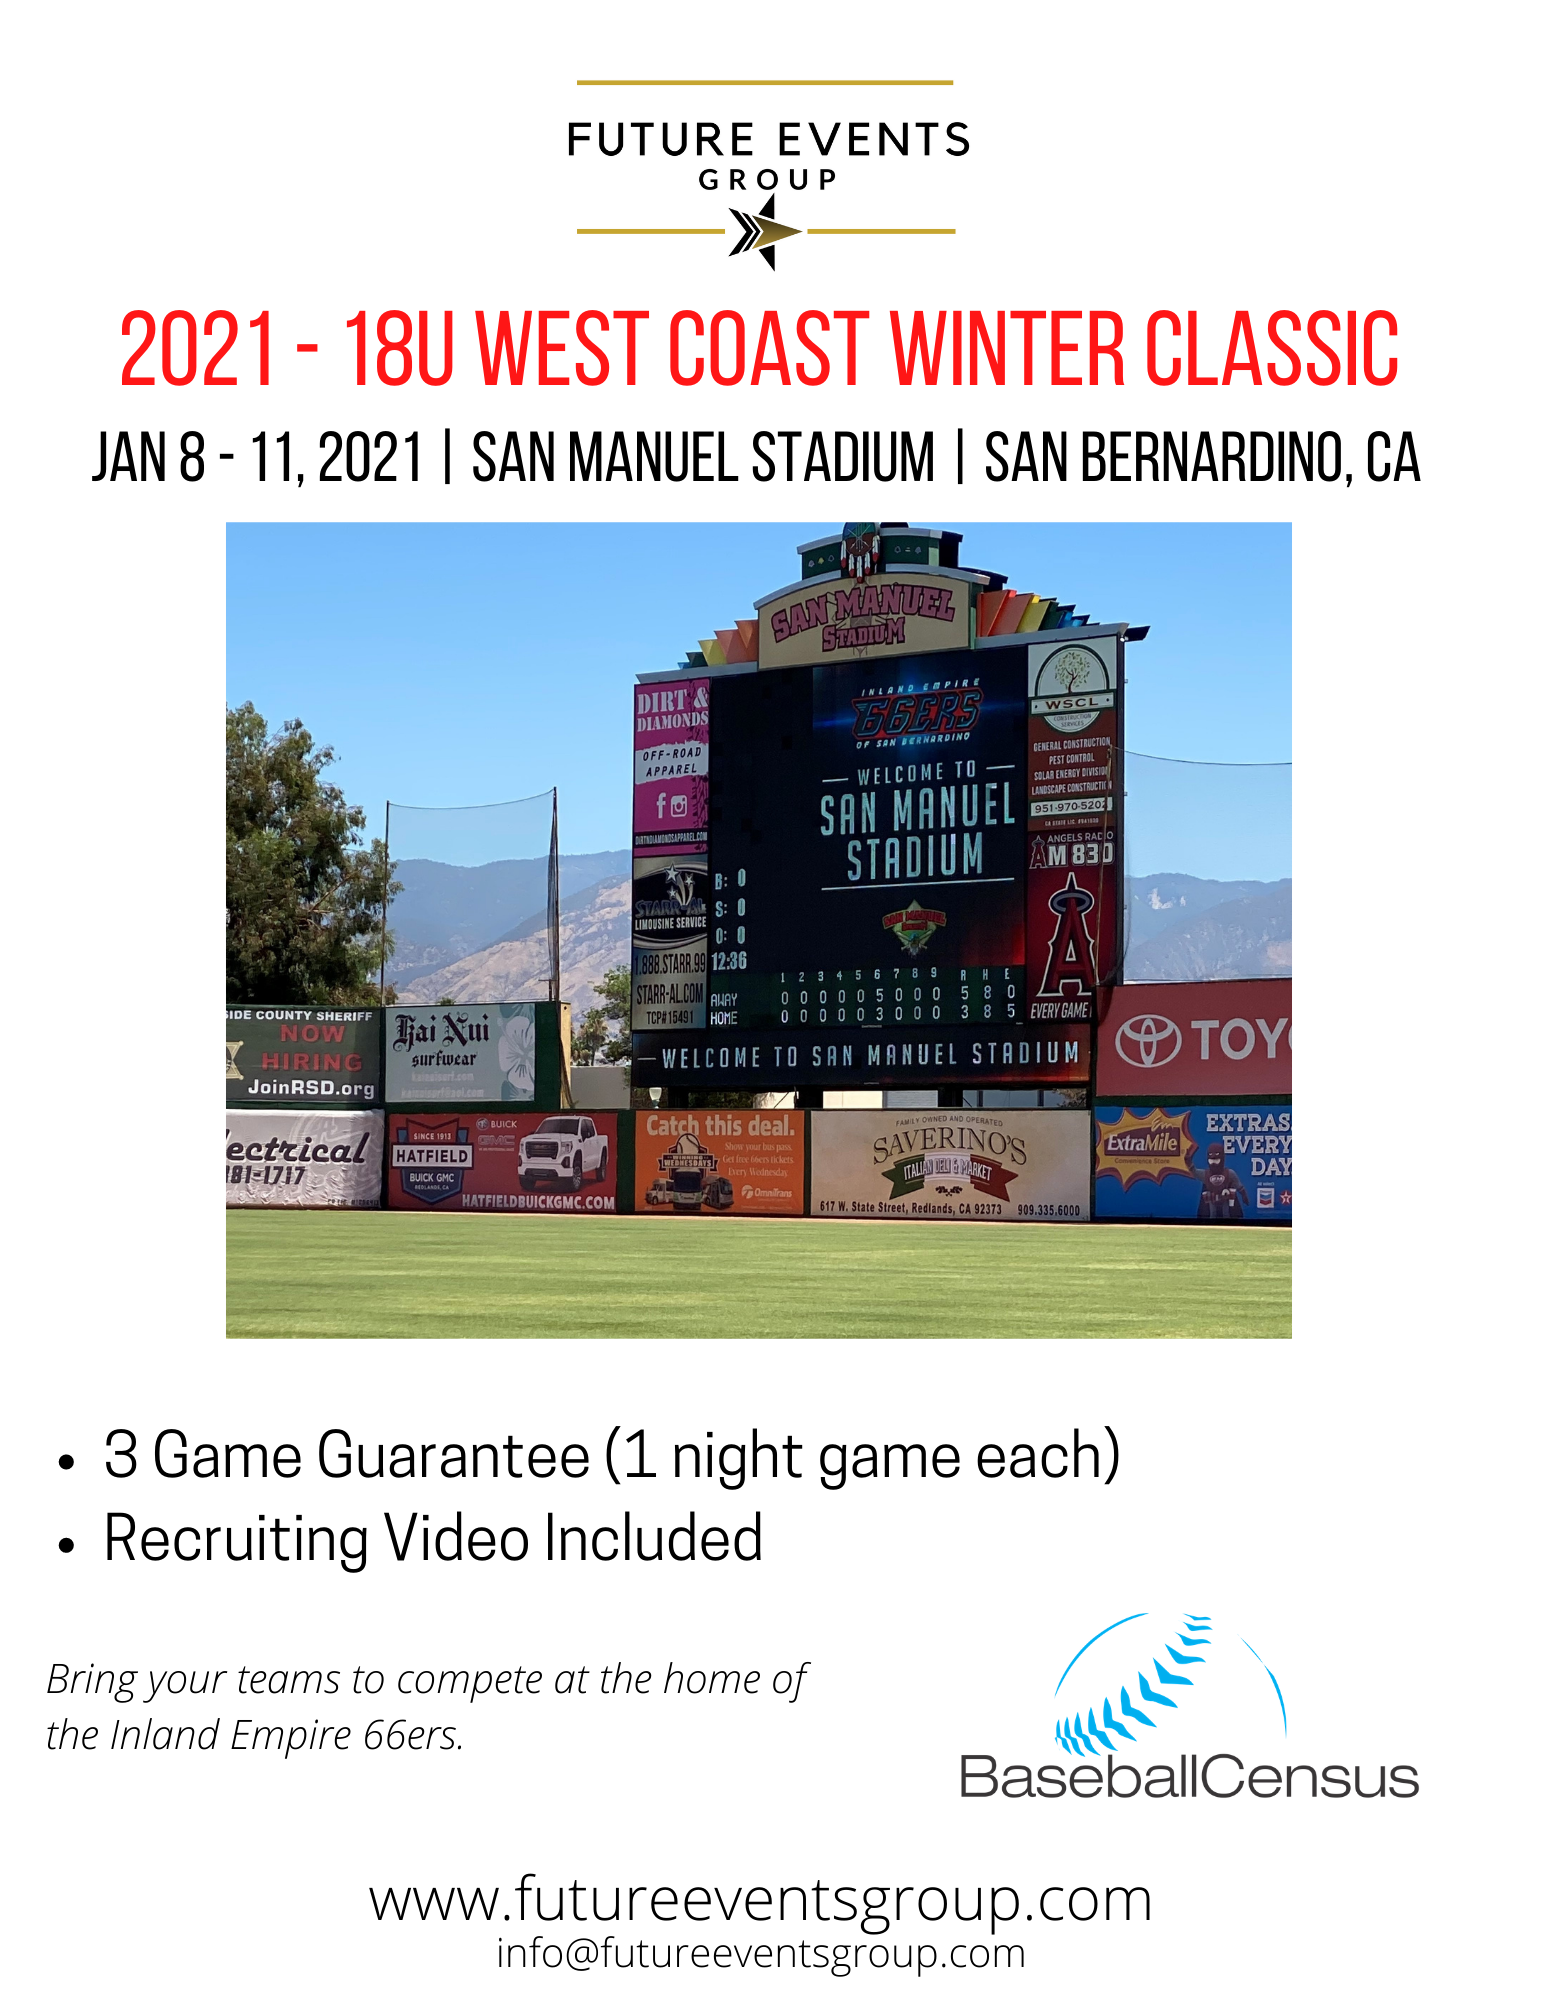 2021 West Coast Winter Classic - 18U Tournament